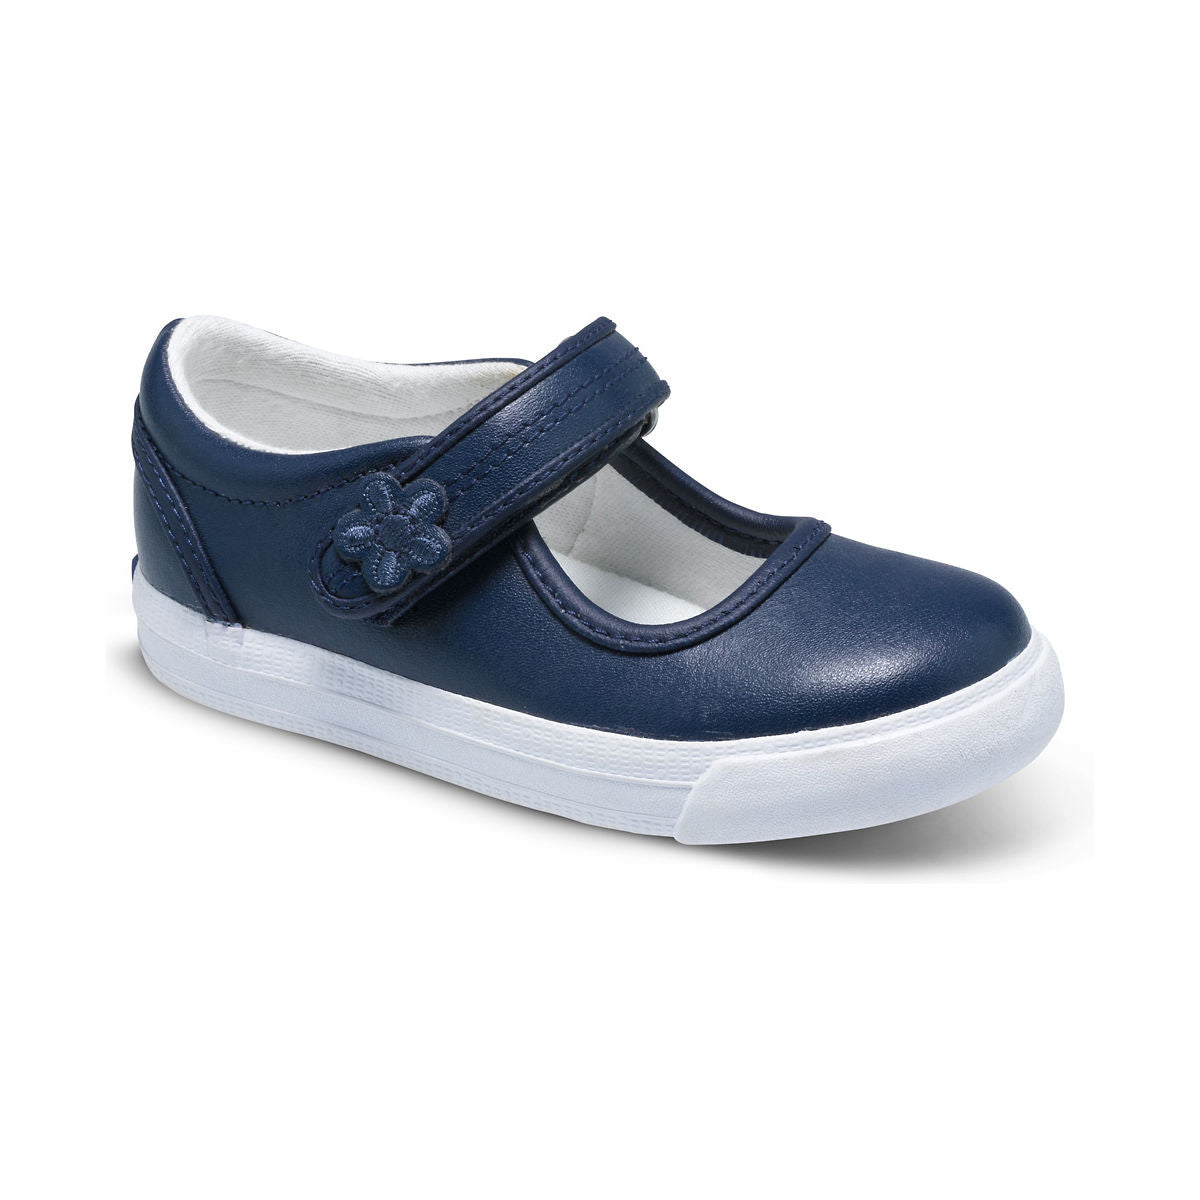 Ella - Navy - Ponseti's Shoes